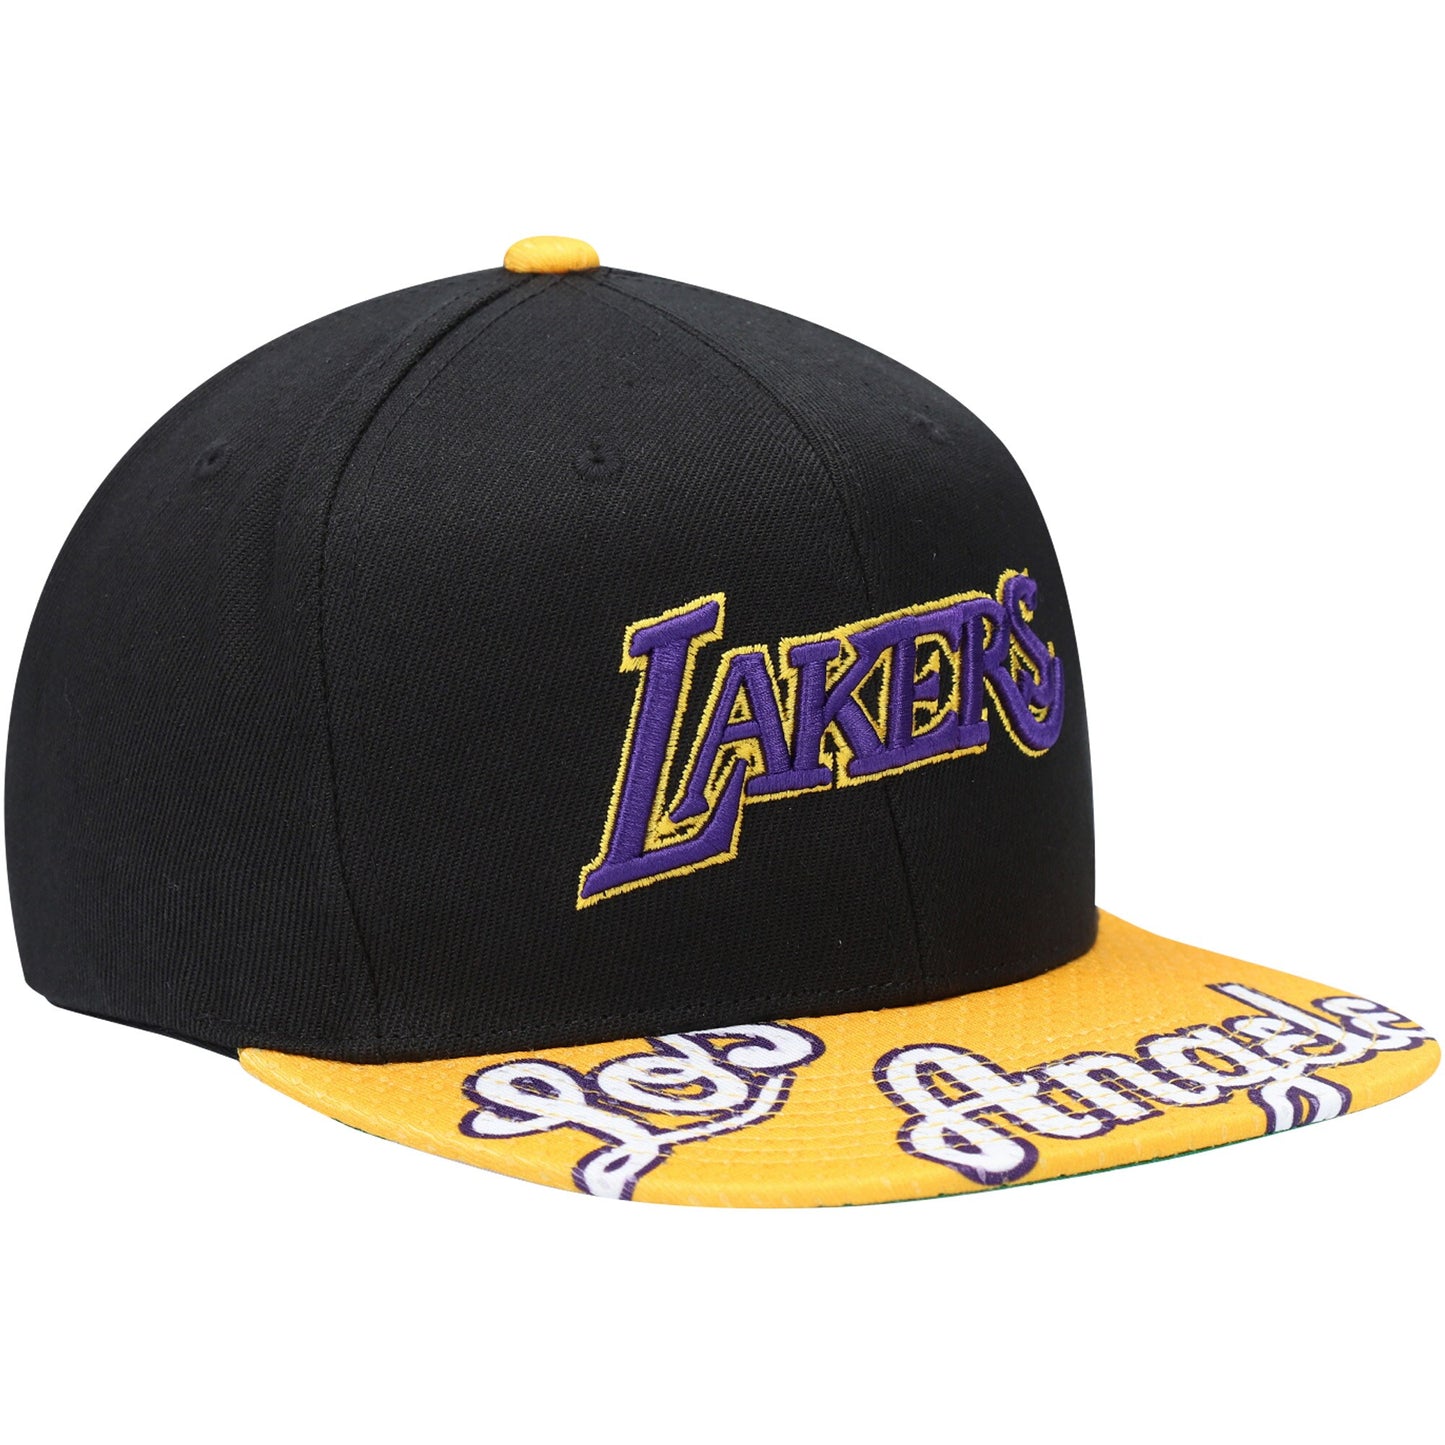 Men's Mitchell & Ness Black/Gold Los Angeles Lakers Hardwood Classics Snapshot Adjustable Snapback Hat